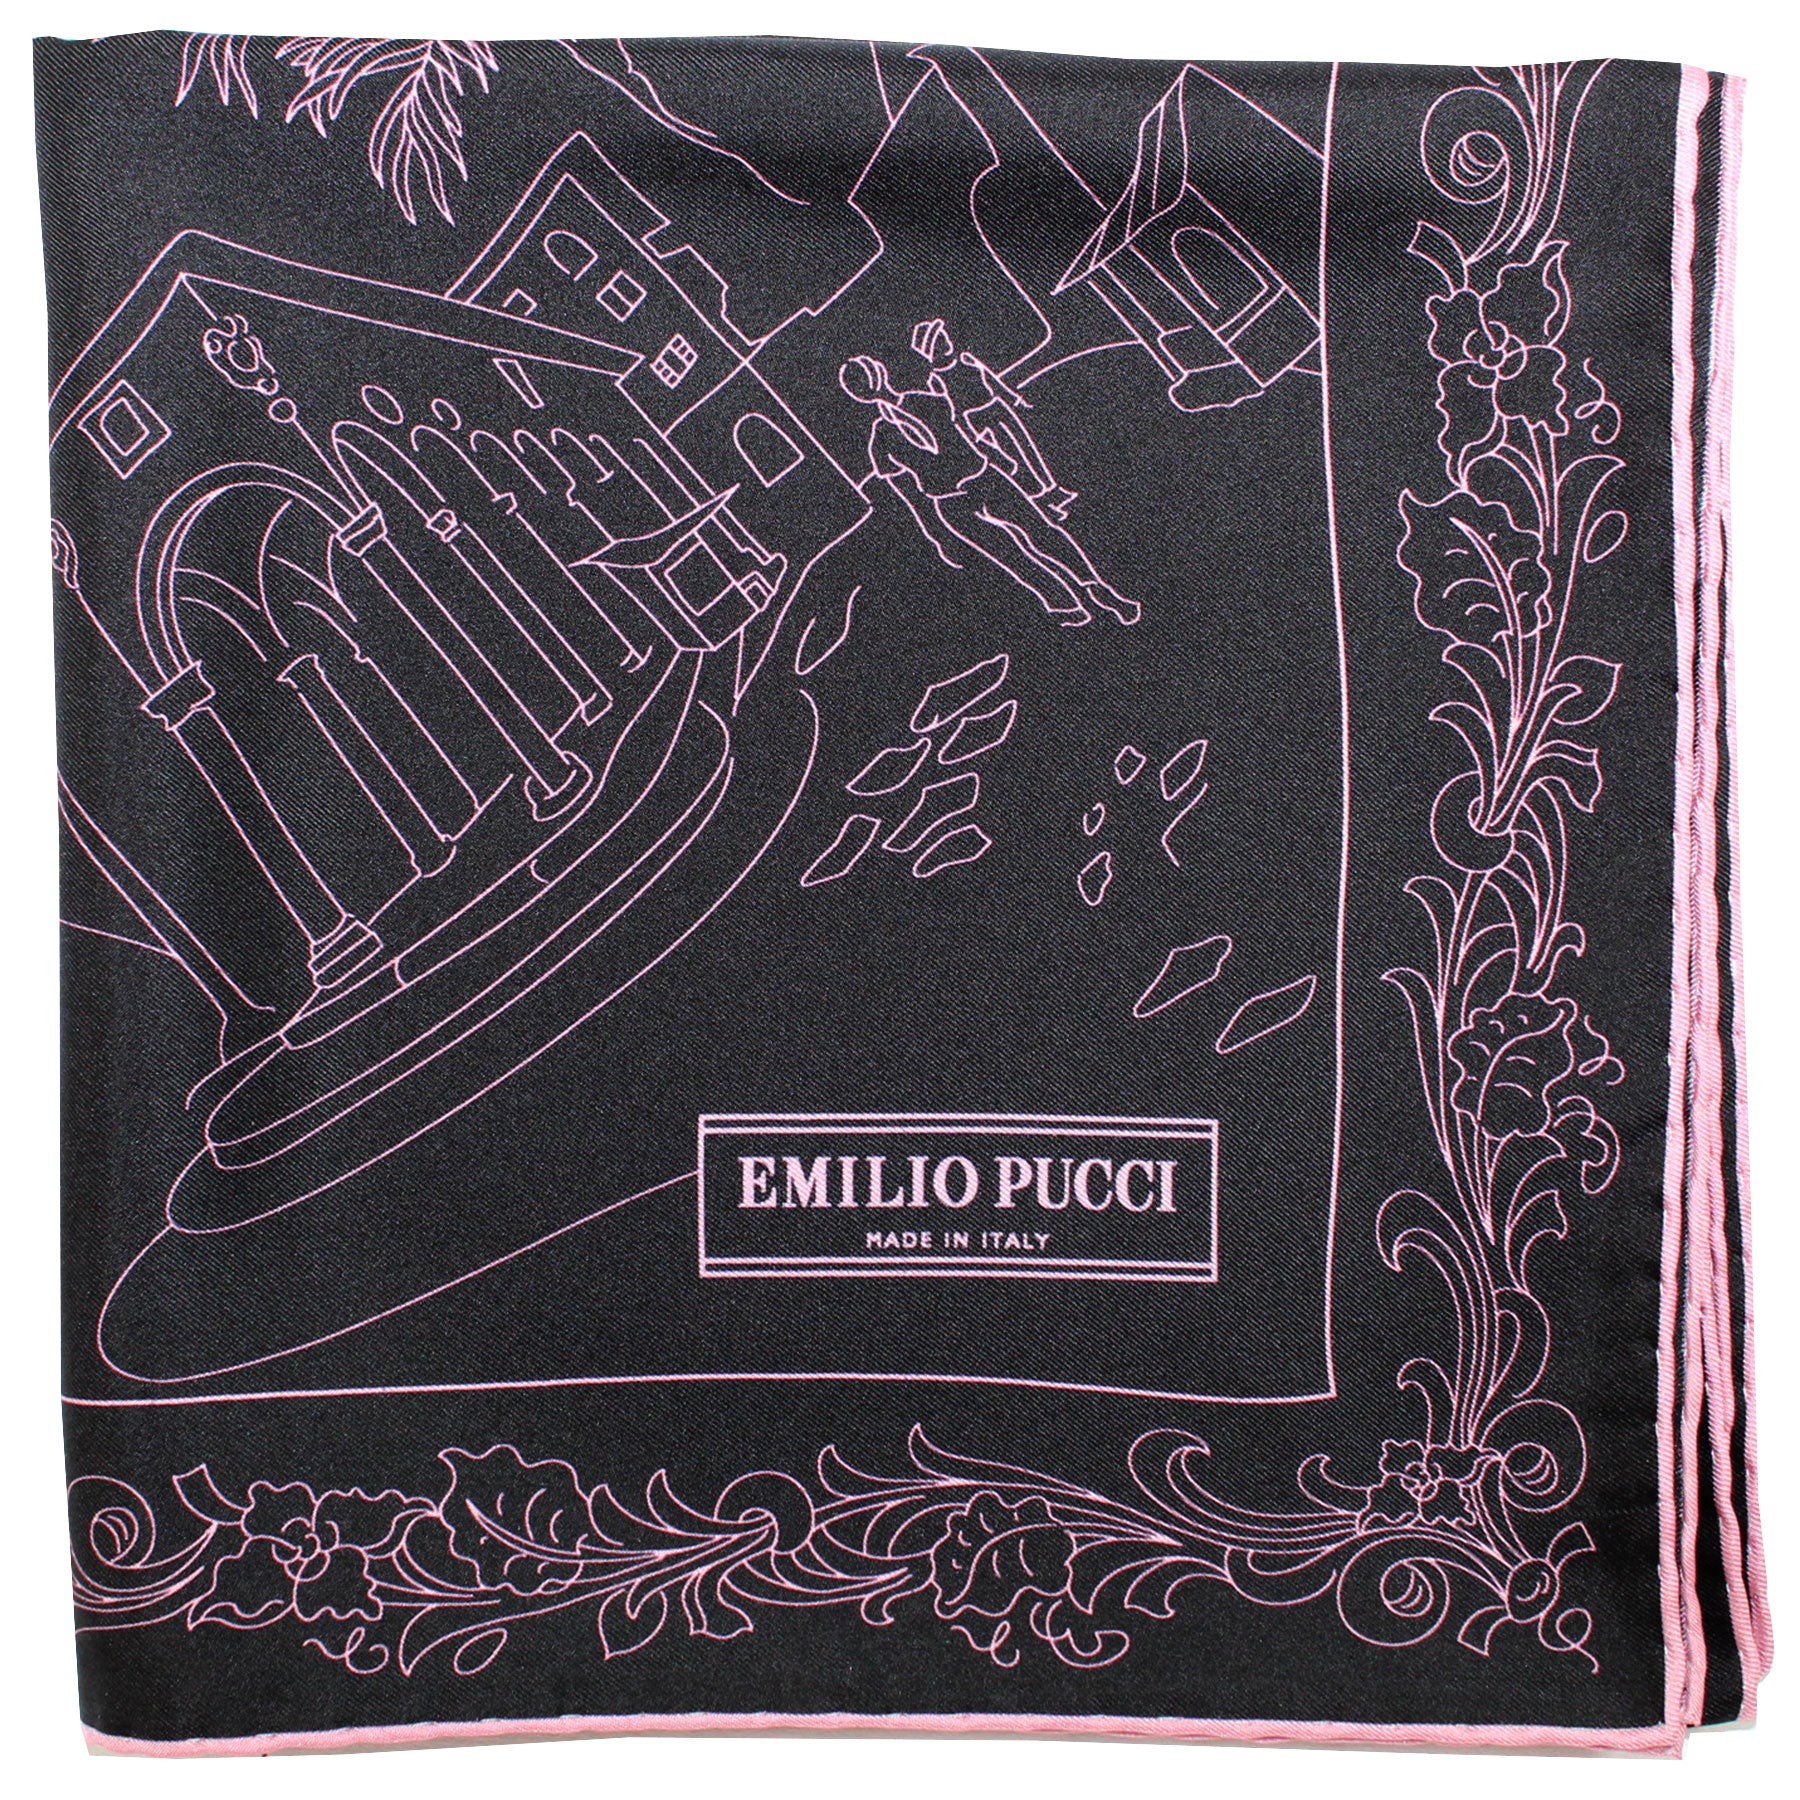 Emilio Pucci Scarf Black Pink Ornamental - Twill Silk Square Foulard